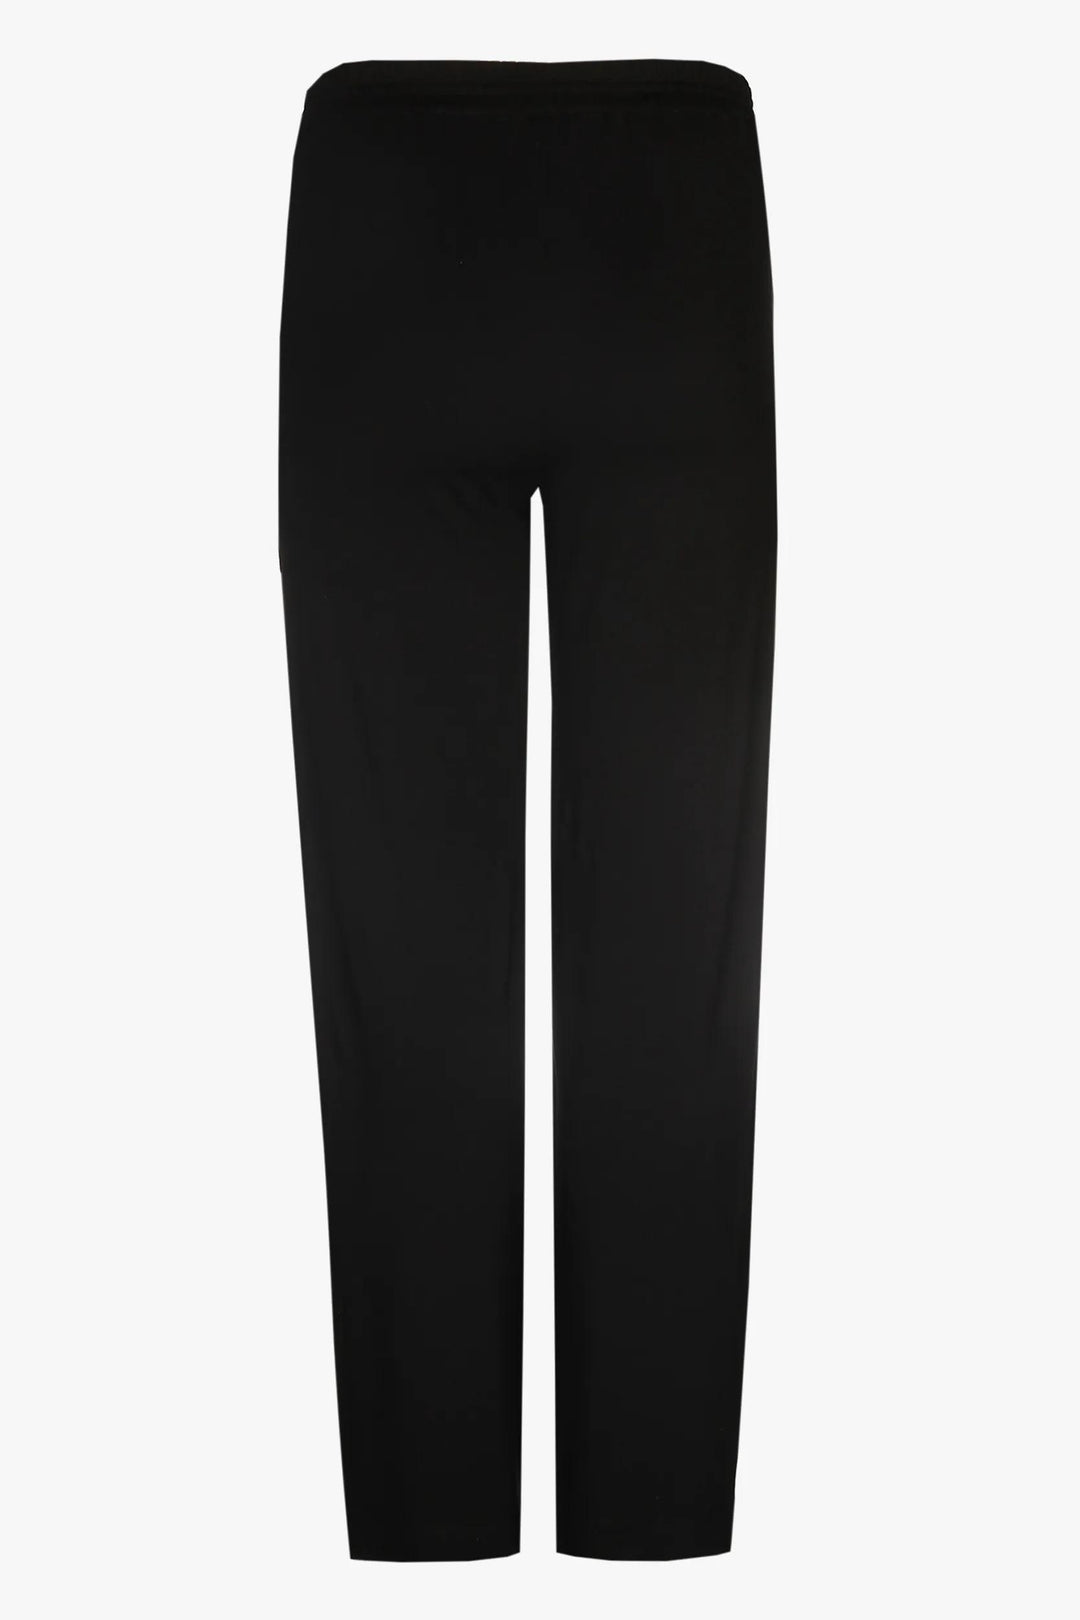 zwarte broek van comfortabele stretch - xandres - - grote maten - dameskleding - kledingwinkel - herent - leuven